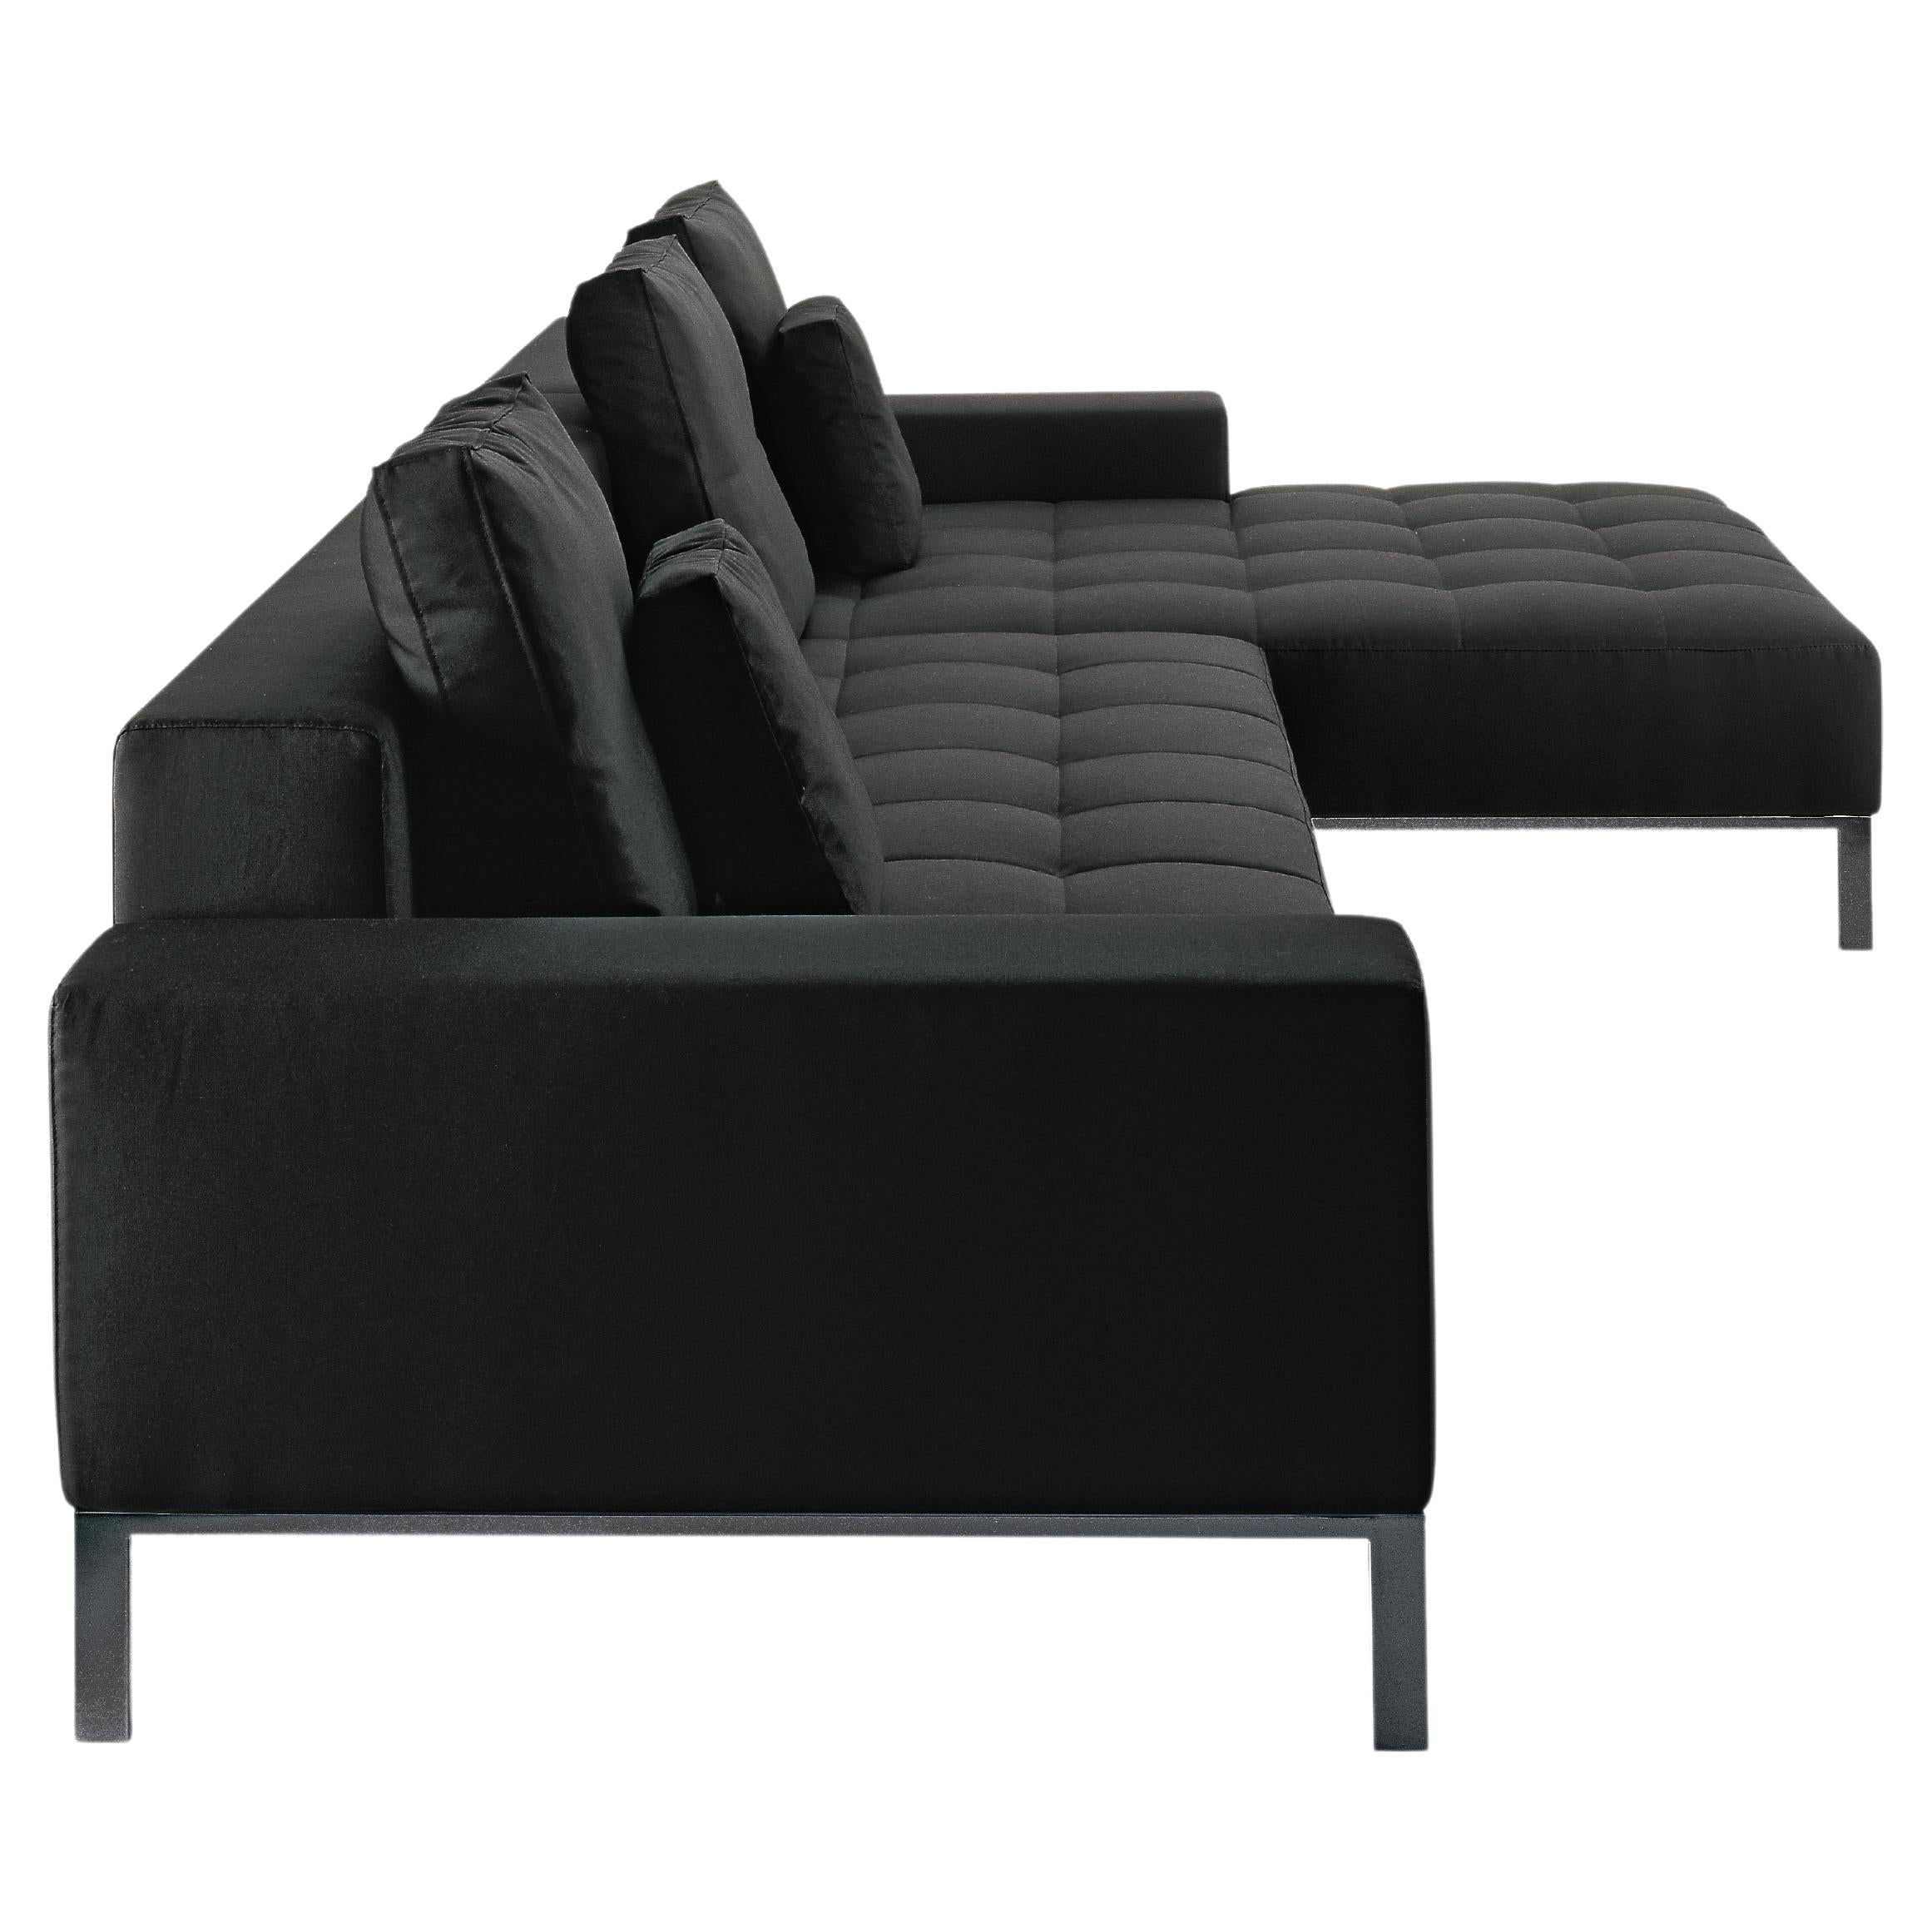 Zanotta Alfa Modular Sofa in Vico Fabric with Black Steel Frame by Emaf Progetti